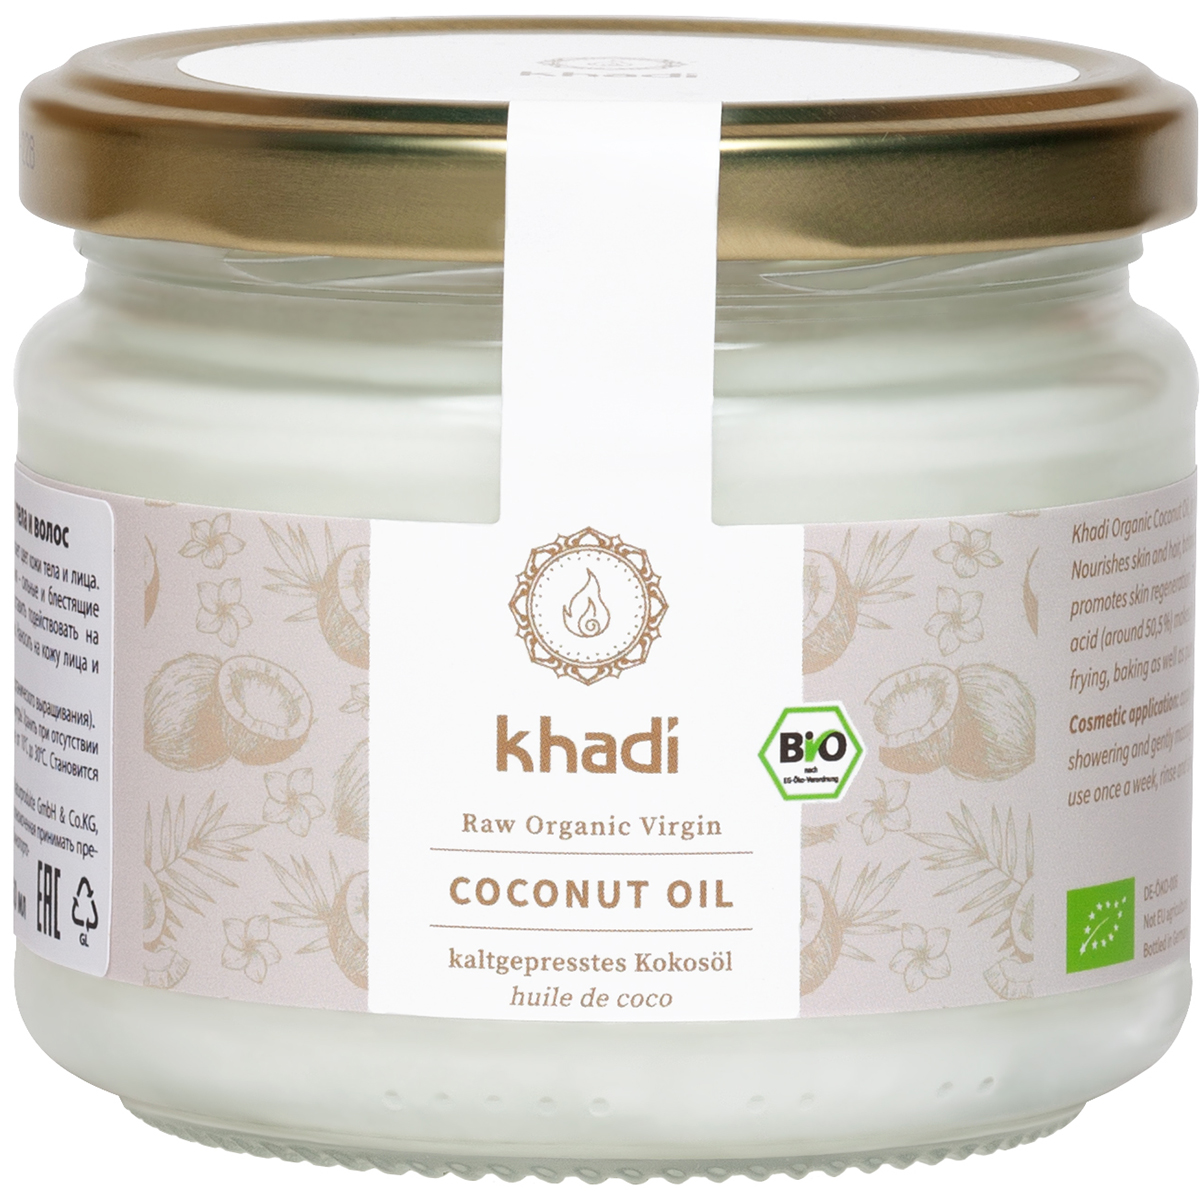 Khadi Кокосовое масло кади био для тела и волос 250 мл (Khadi, Для тела)